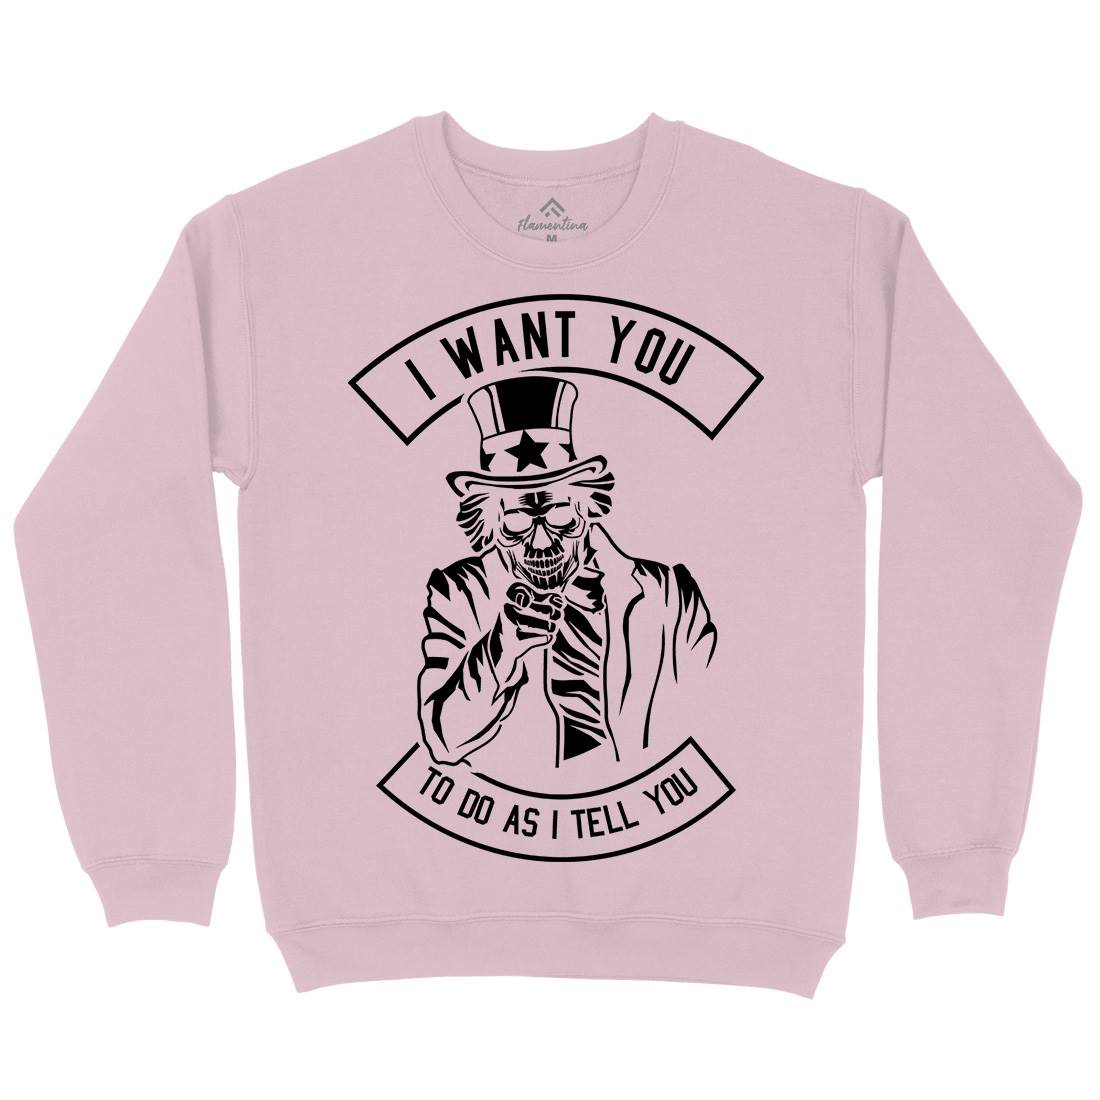 I Want You Kids Crew Neck Sweatshirt Illuminati B561